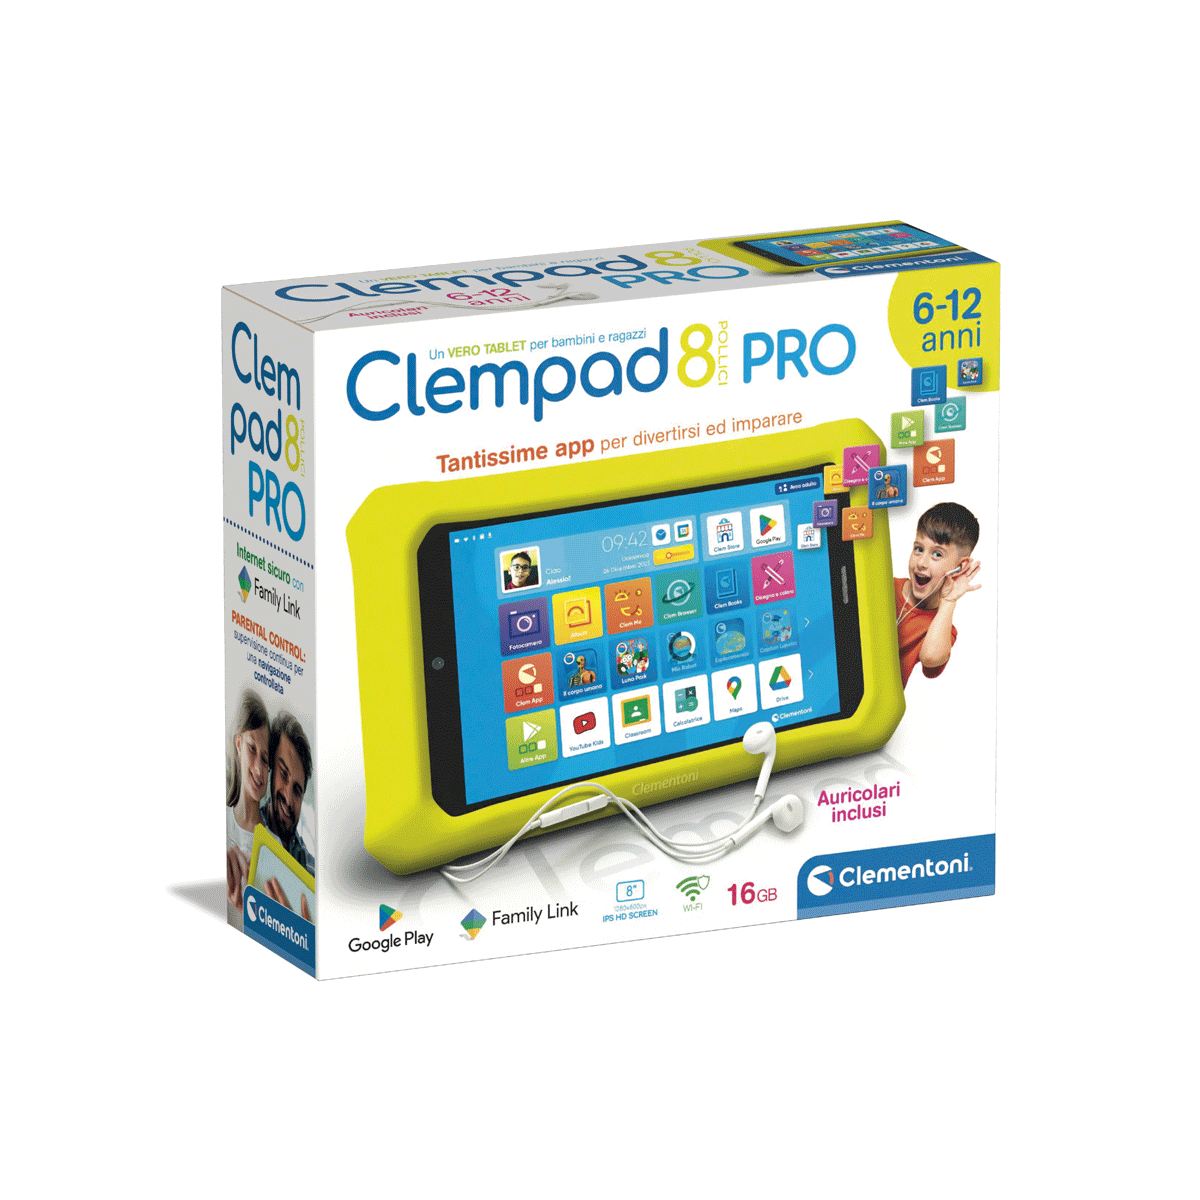 Clementoni - clempad 8" pro, tablet per bambini 6-12 anni - 